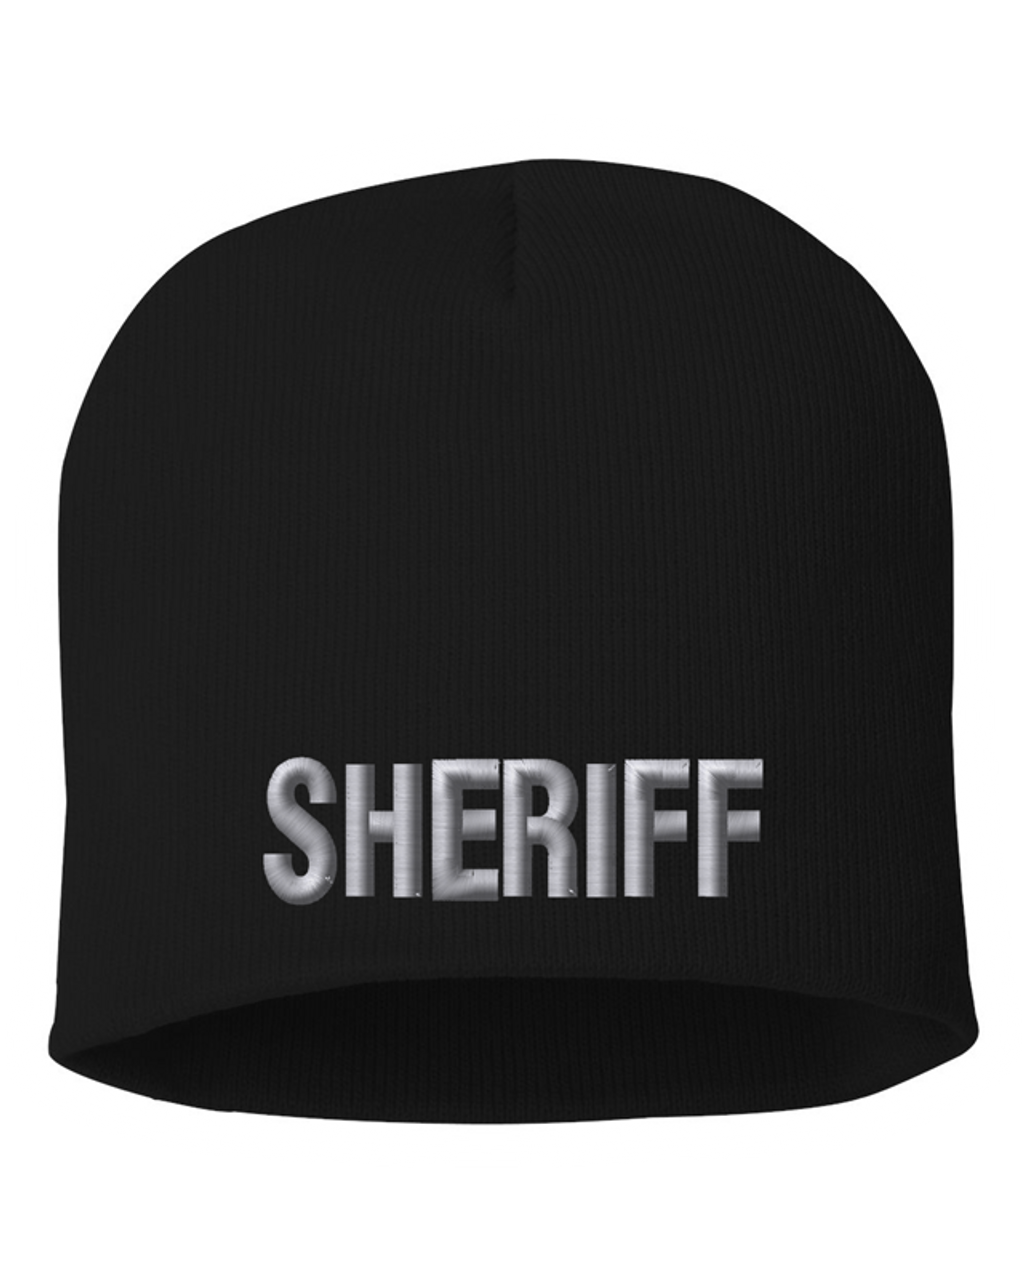 Black knit cap 8 inch with Sheriff in Tear Drop Thread